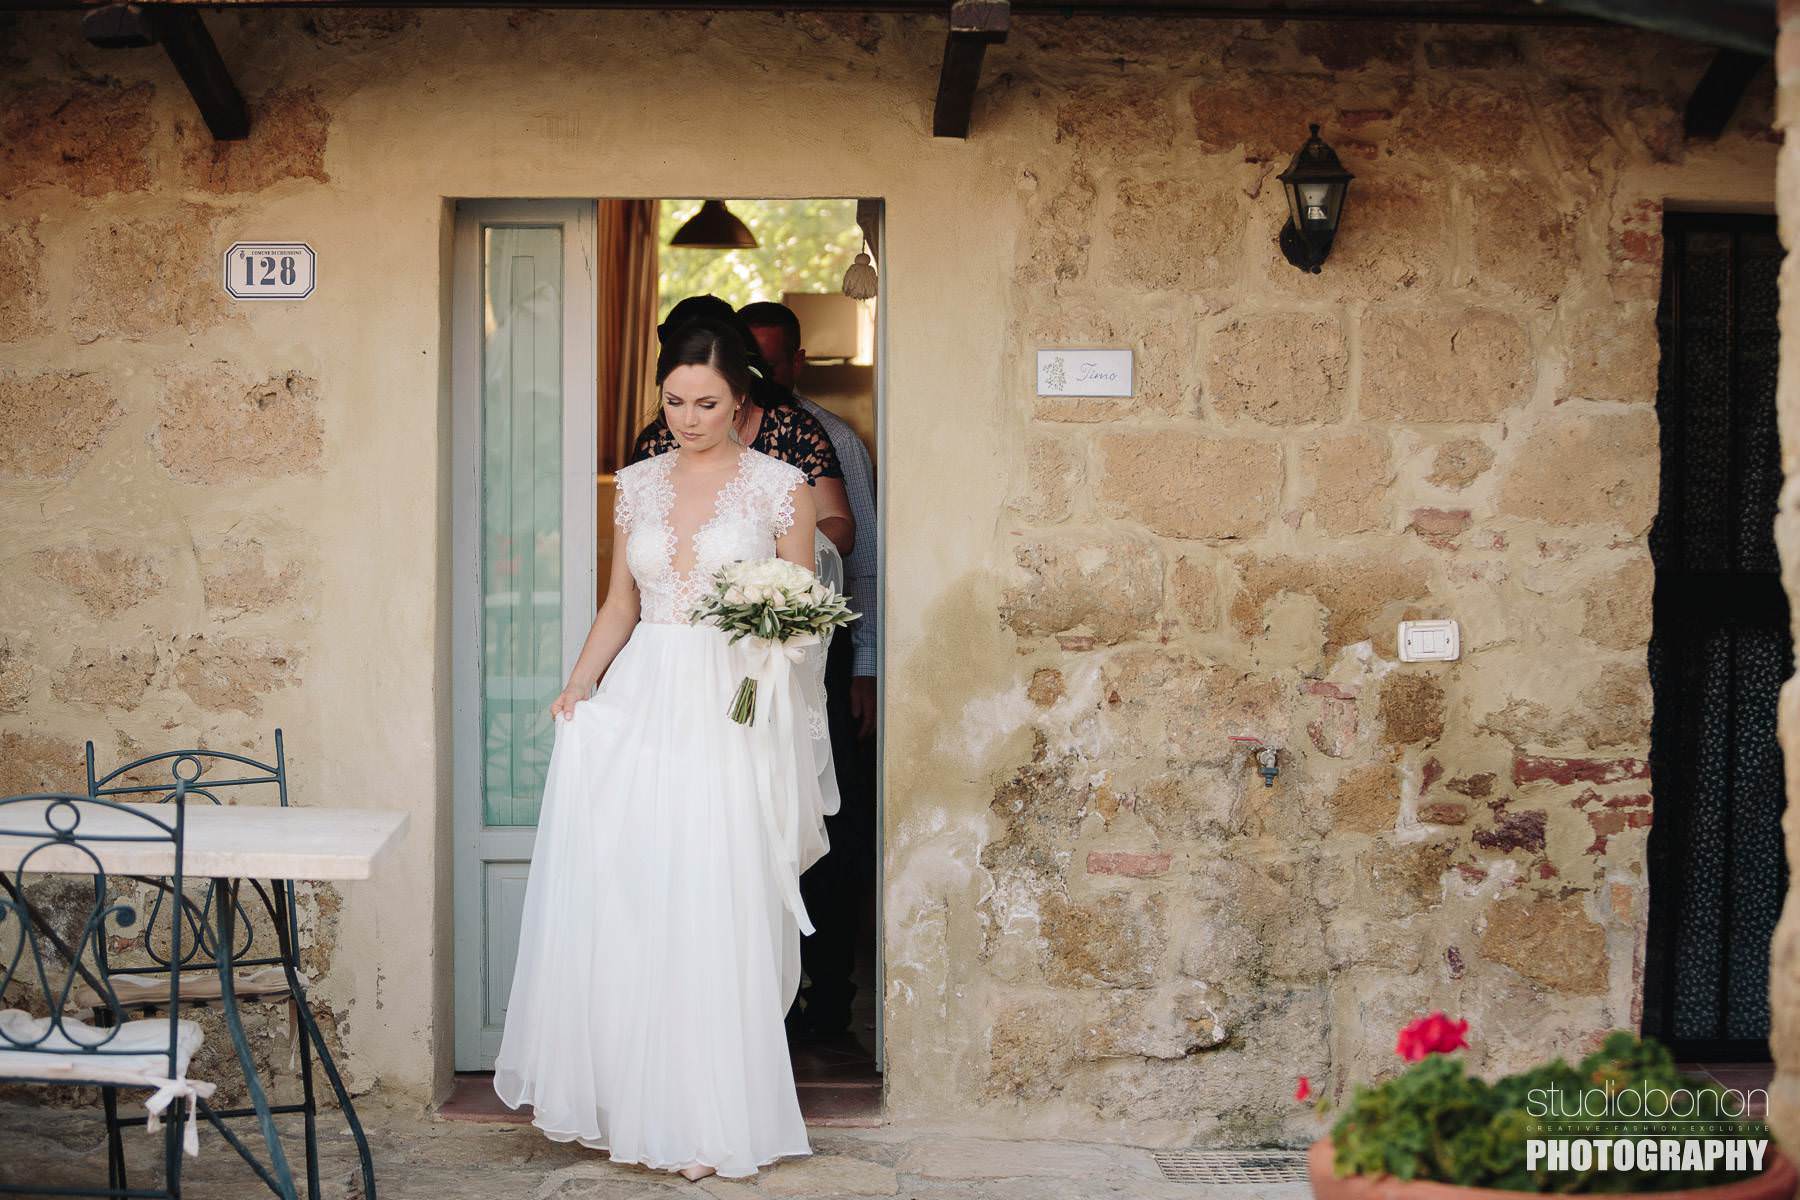 Rustic Tuscany countryside intimate wedding at Tenuta di Papena and Roofless Abbey of San Galagano